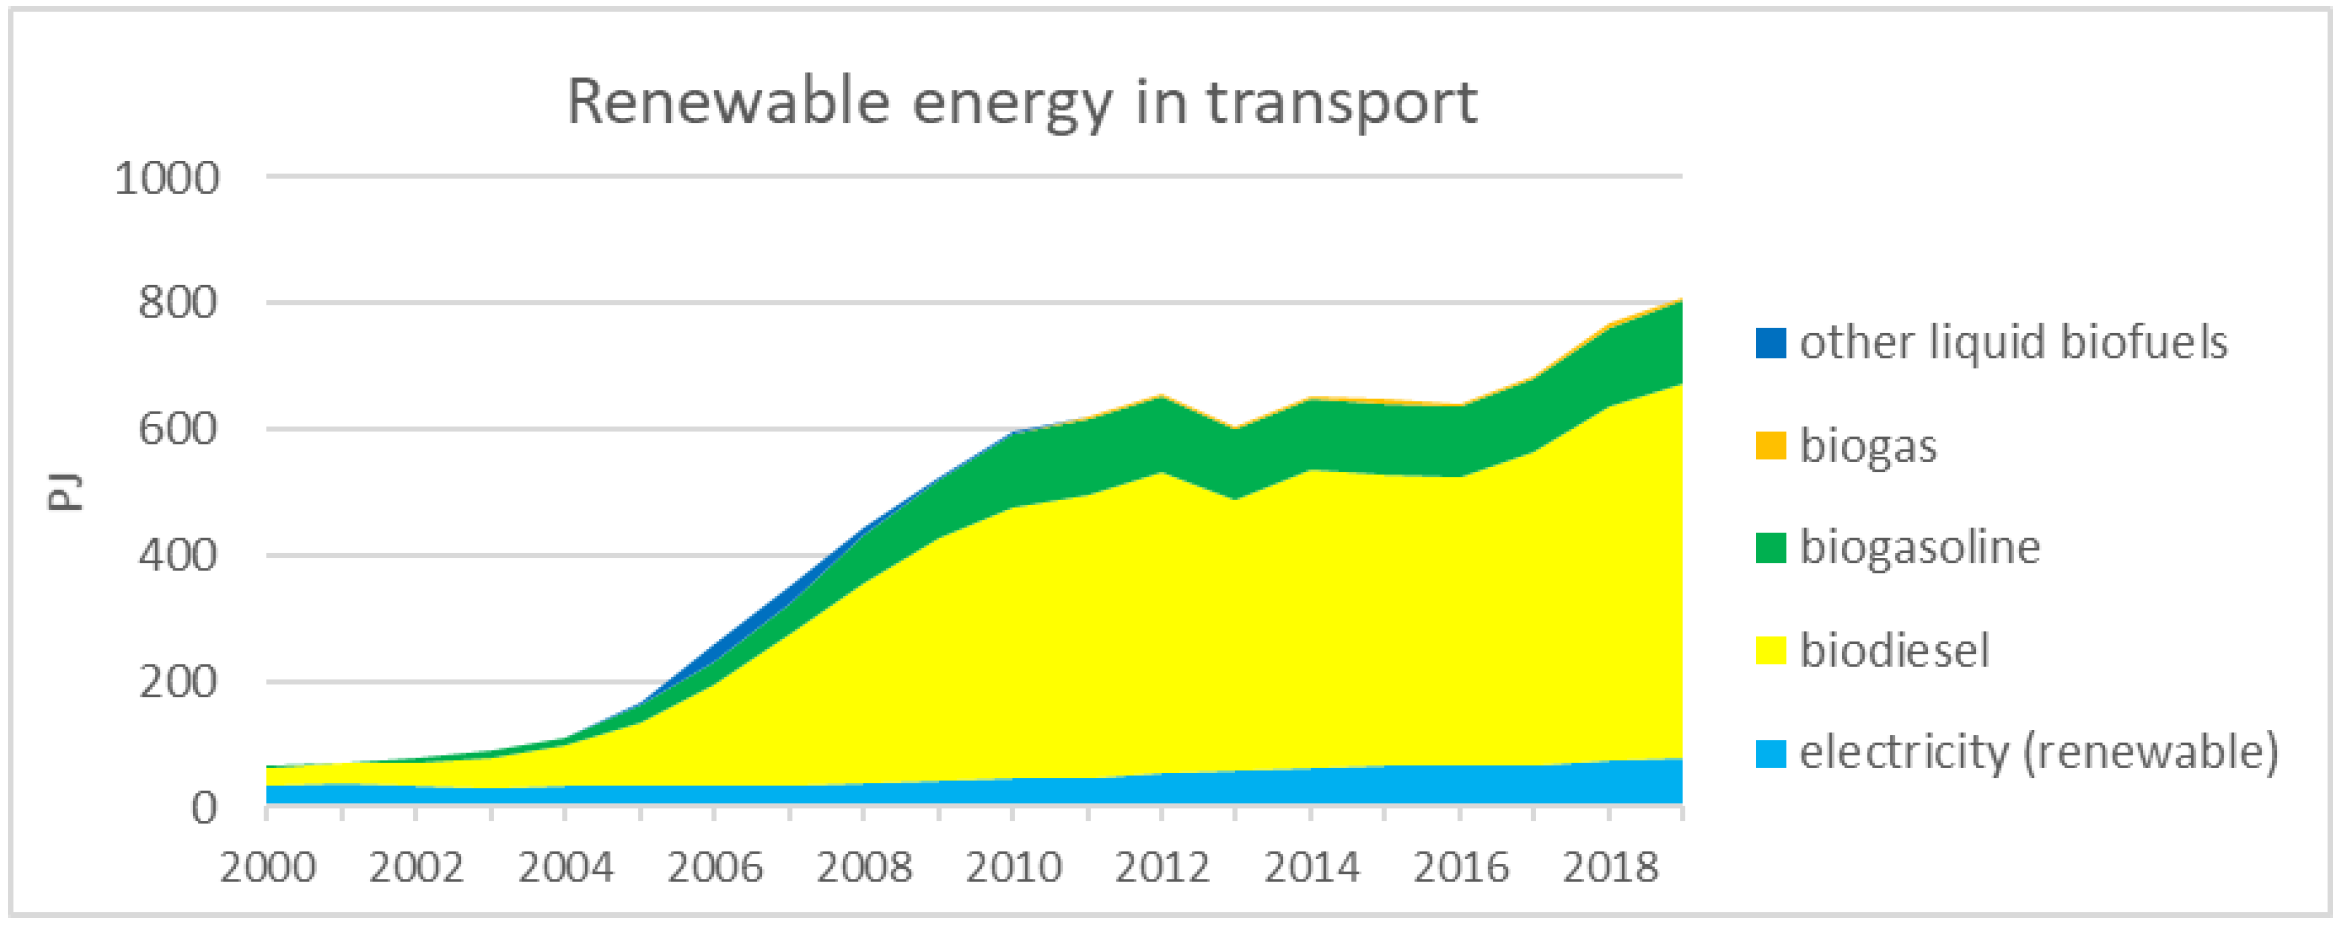 Renewable energy in transport (IEA)